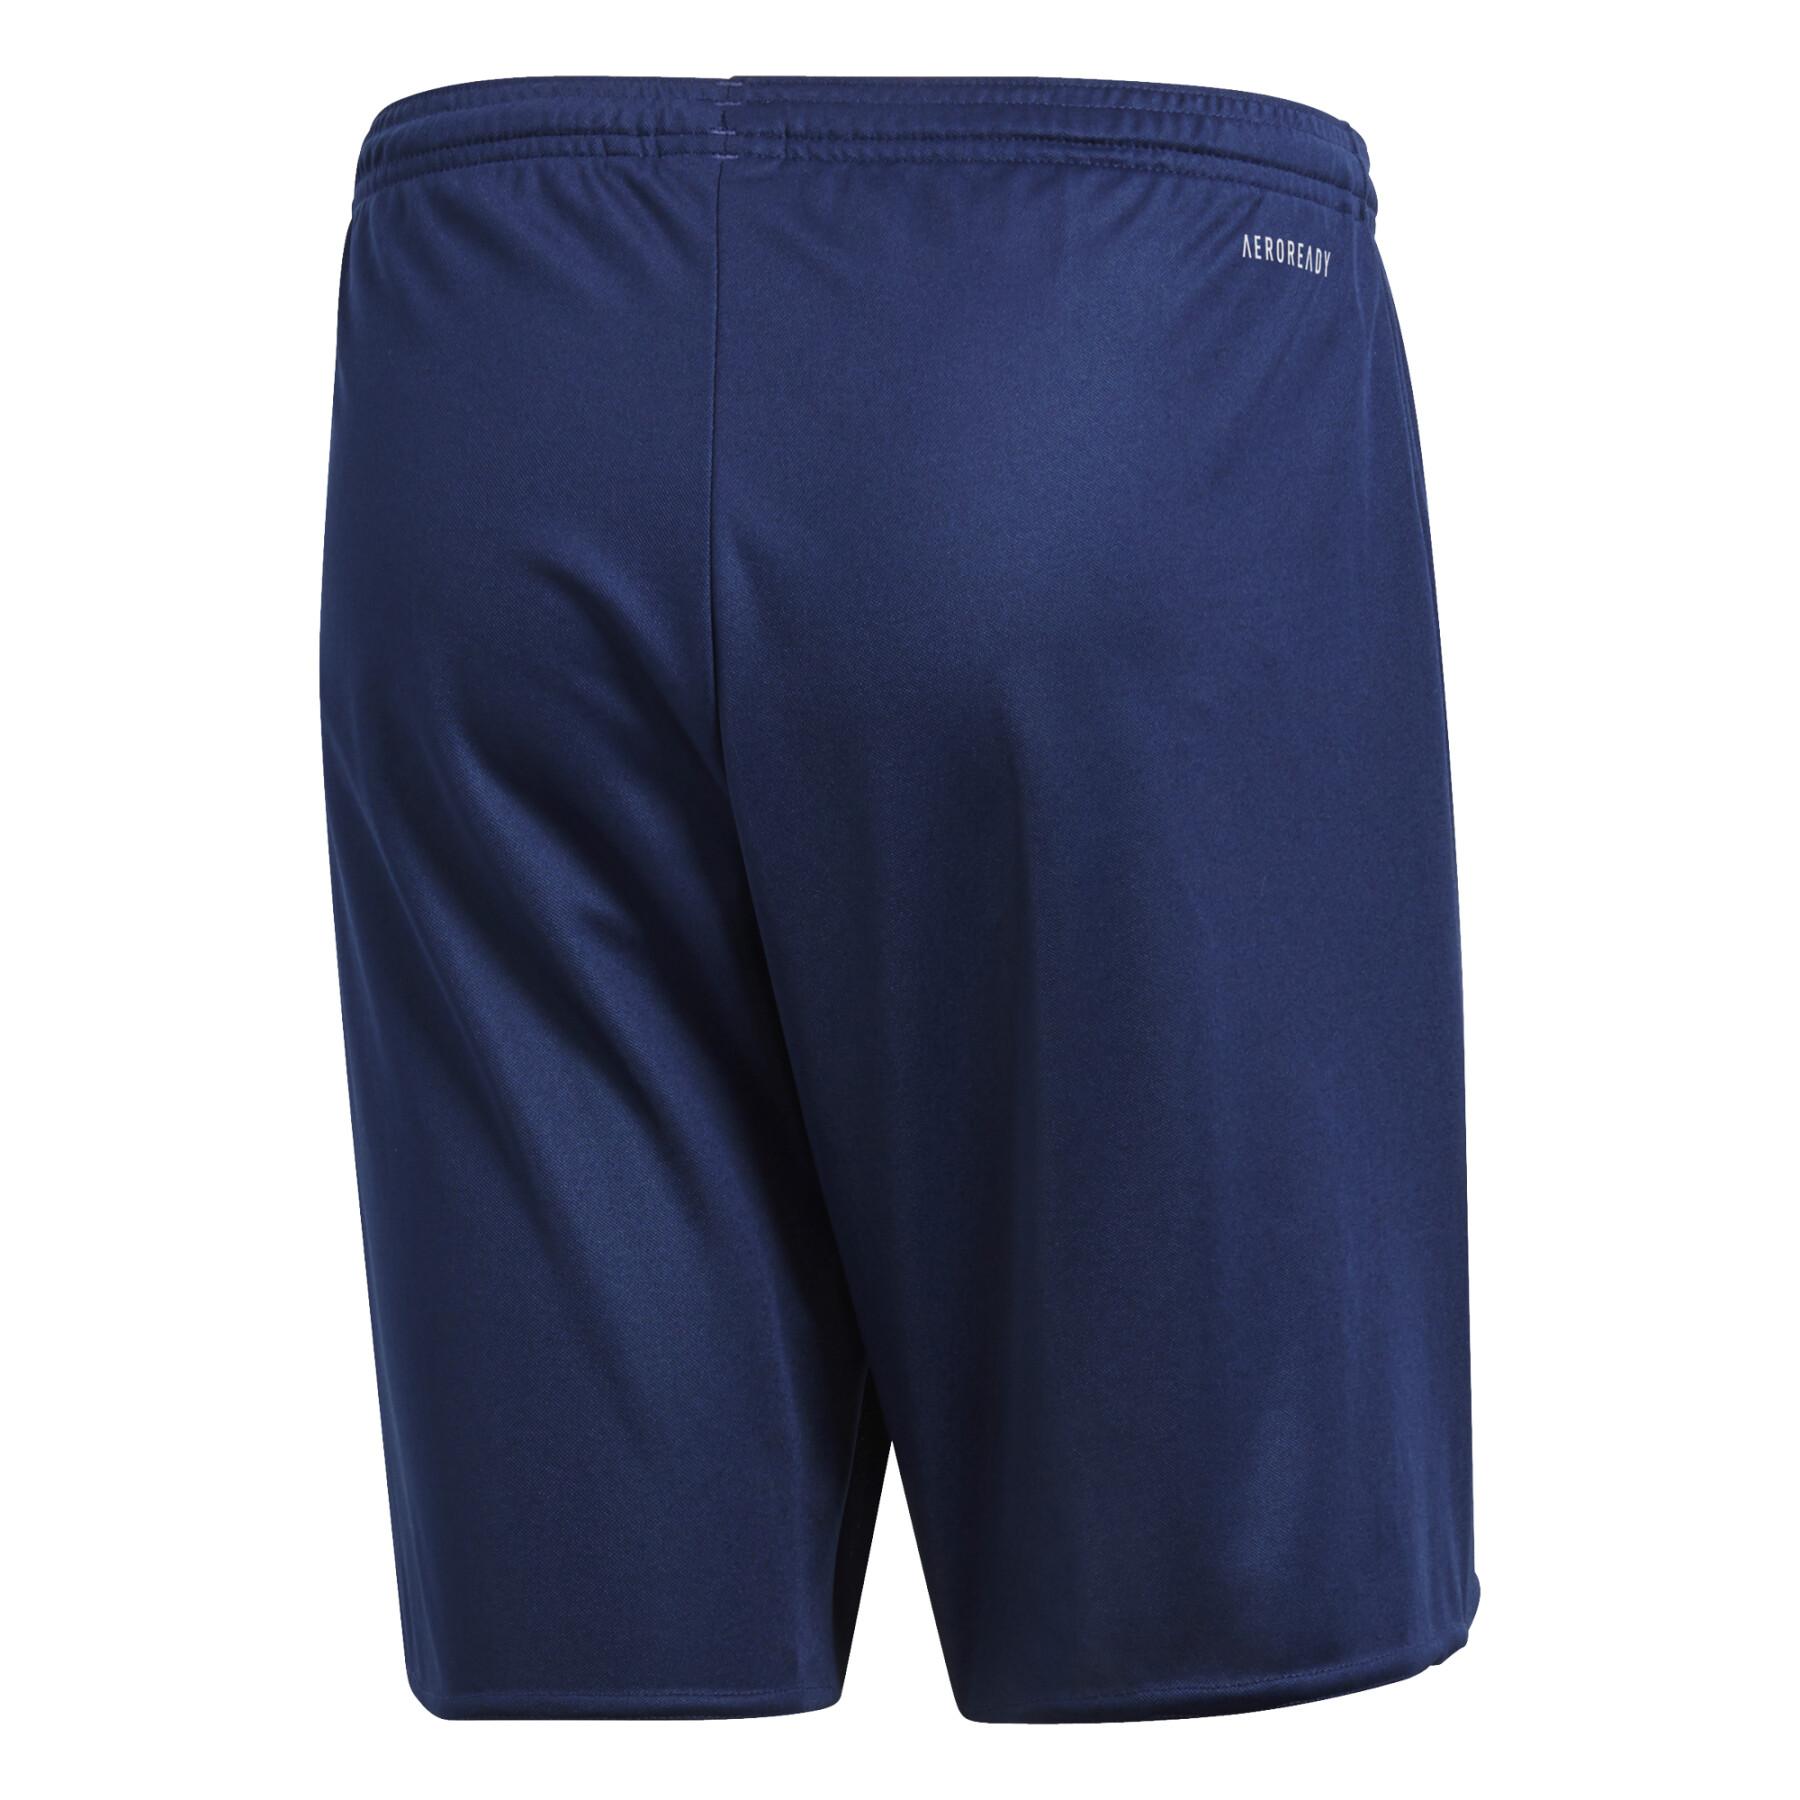 Slipper shorts adidas Parma 16 